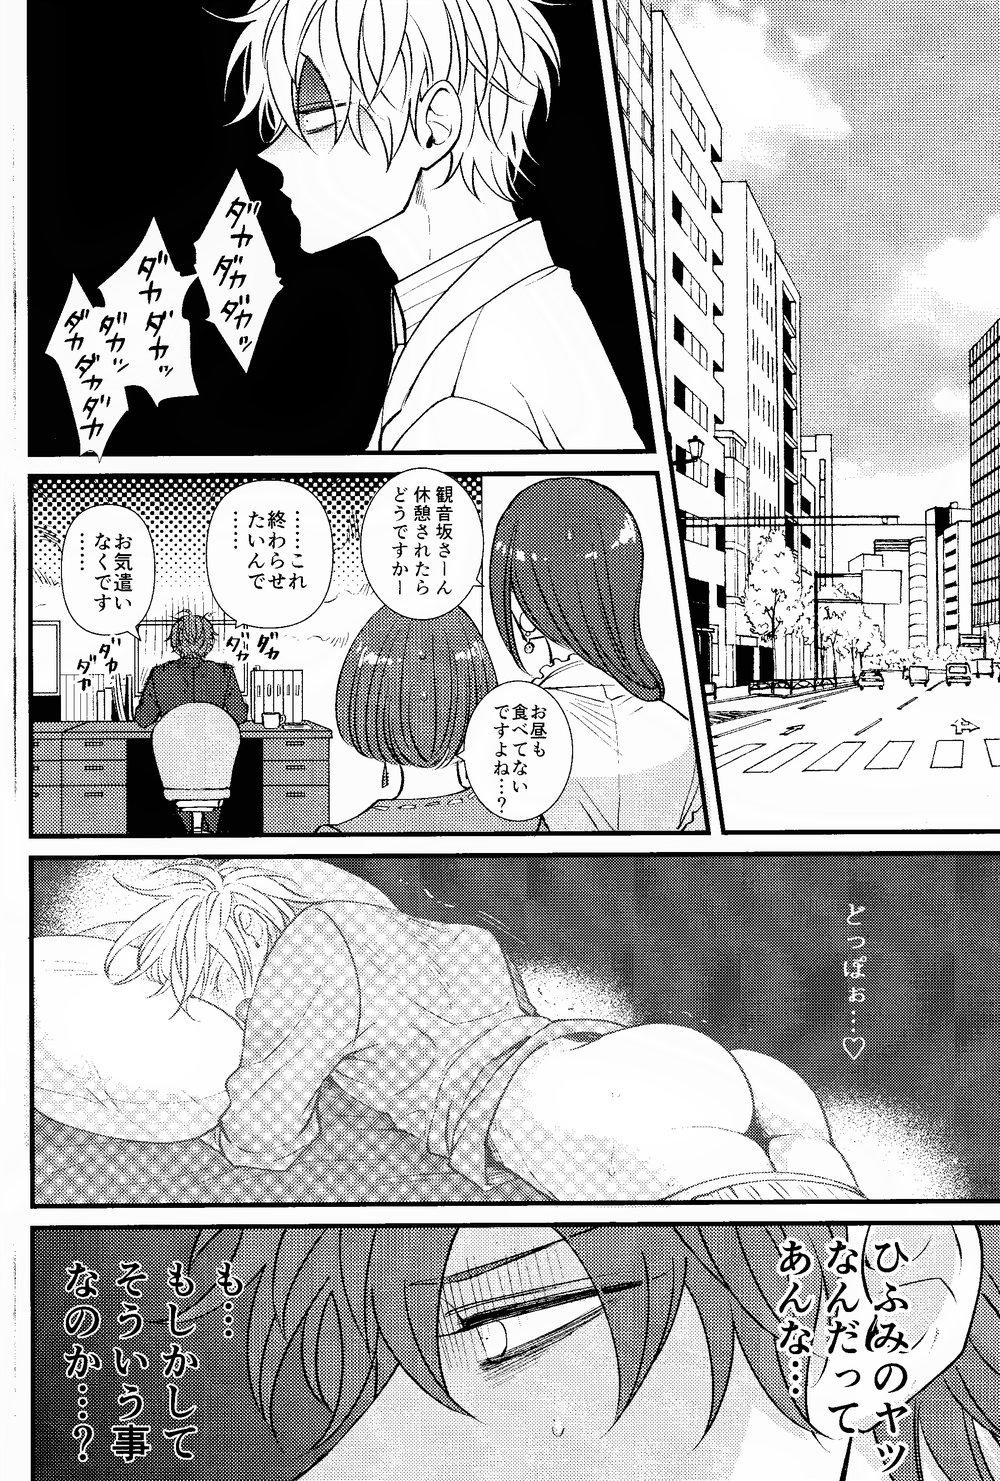 Milk Hifumi-kun ni wa Himitsu ga aru - Hypnosis mic Screaming - Page 11